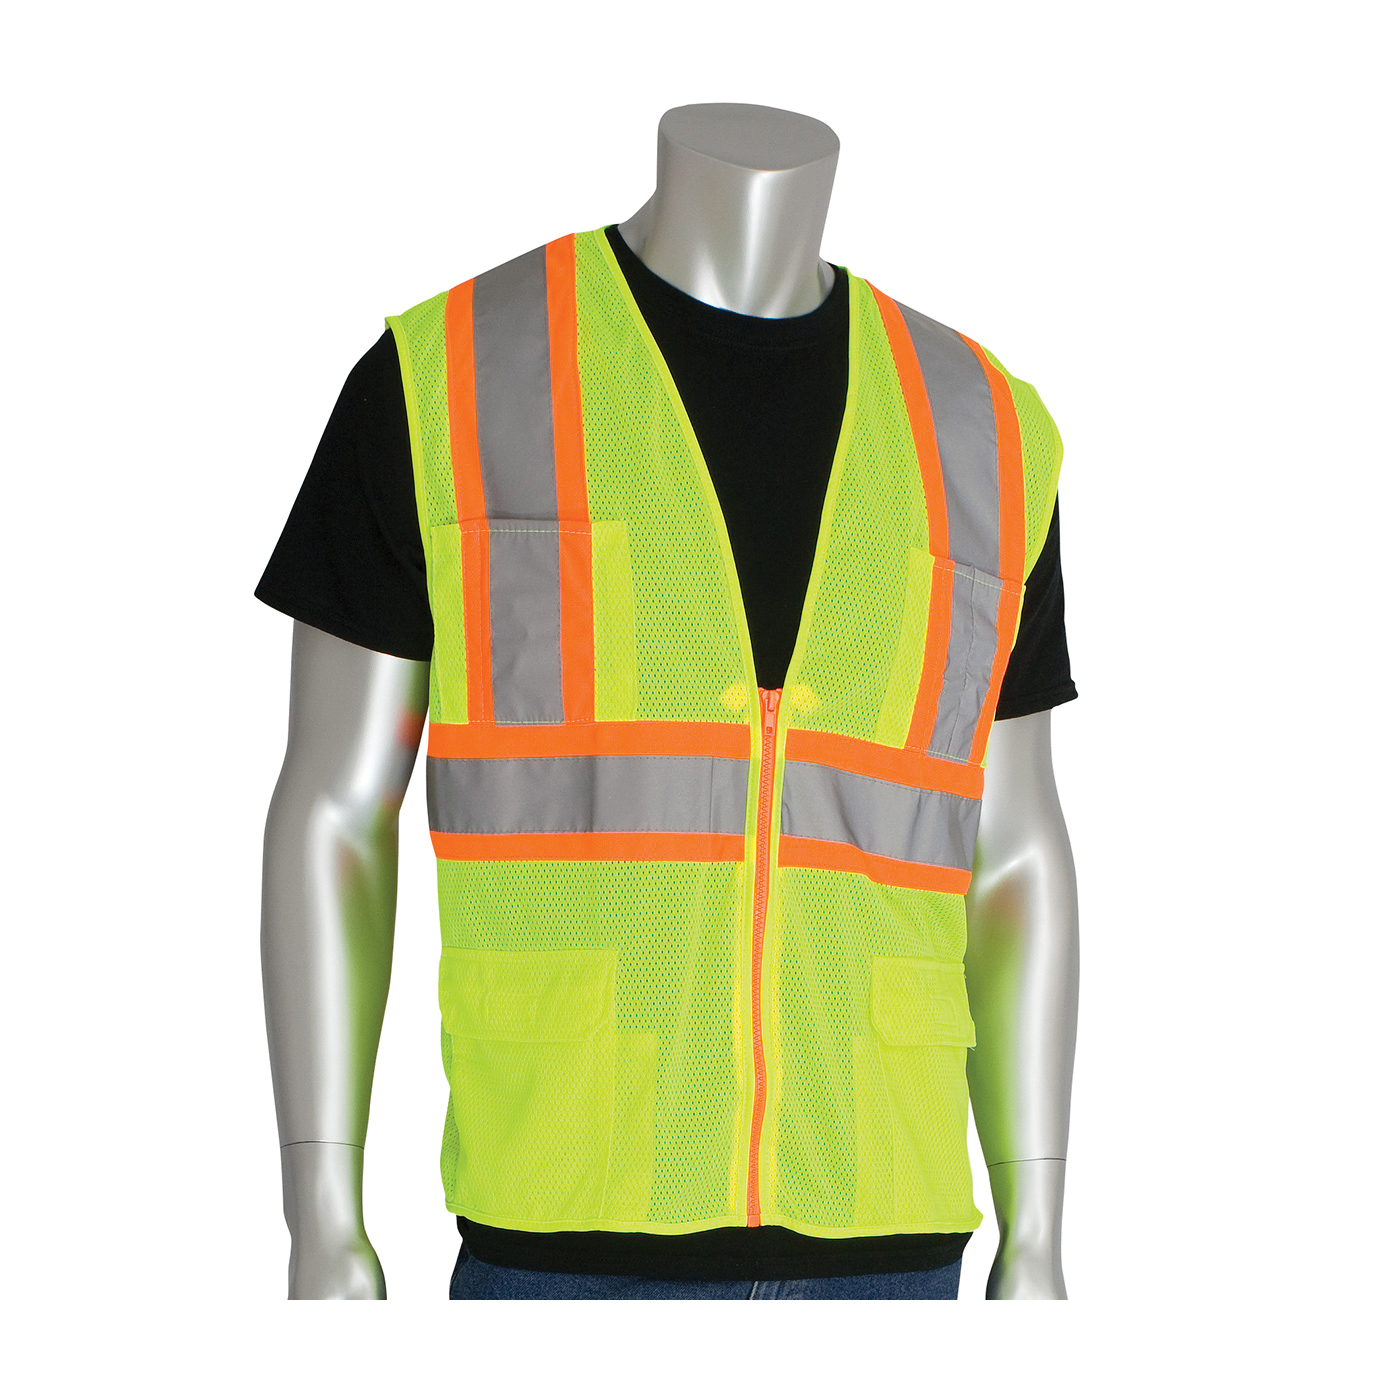 PIP® 302-MAPMLY-5X 2-Tone Premium Surveyor Safety Vest, 5XL, Hi-Viz Lime Yellow, Polyester, Zipper Closure, 11 Pockets, ANSI Class: Class 2, Specifications Met: ANSI 107 Type R